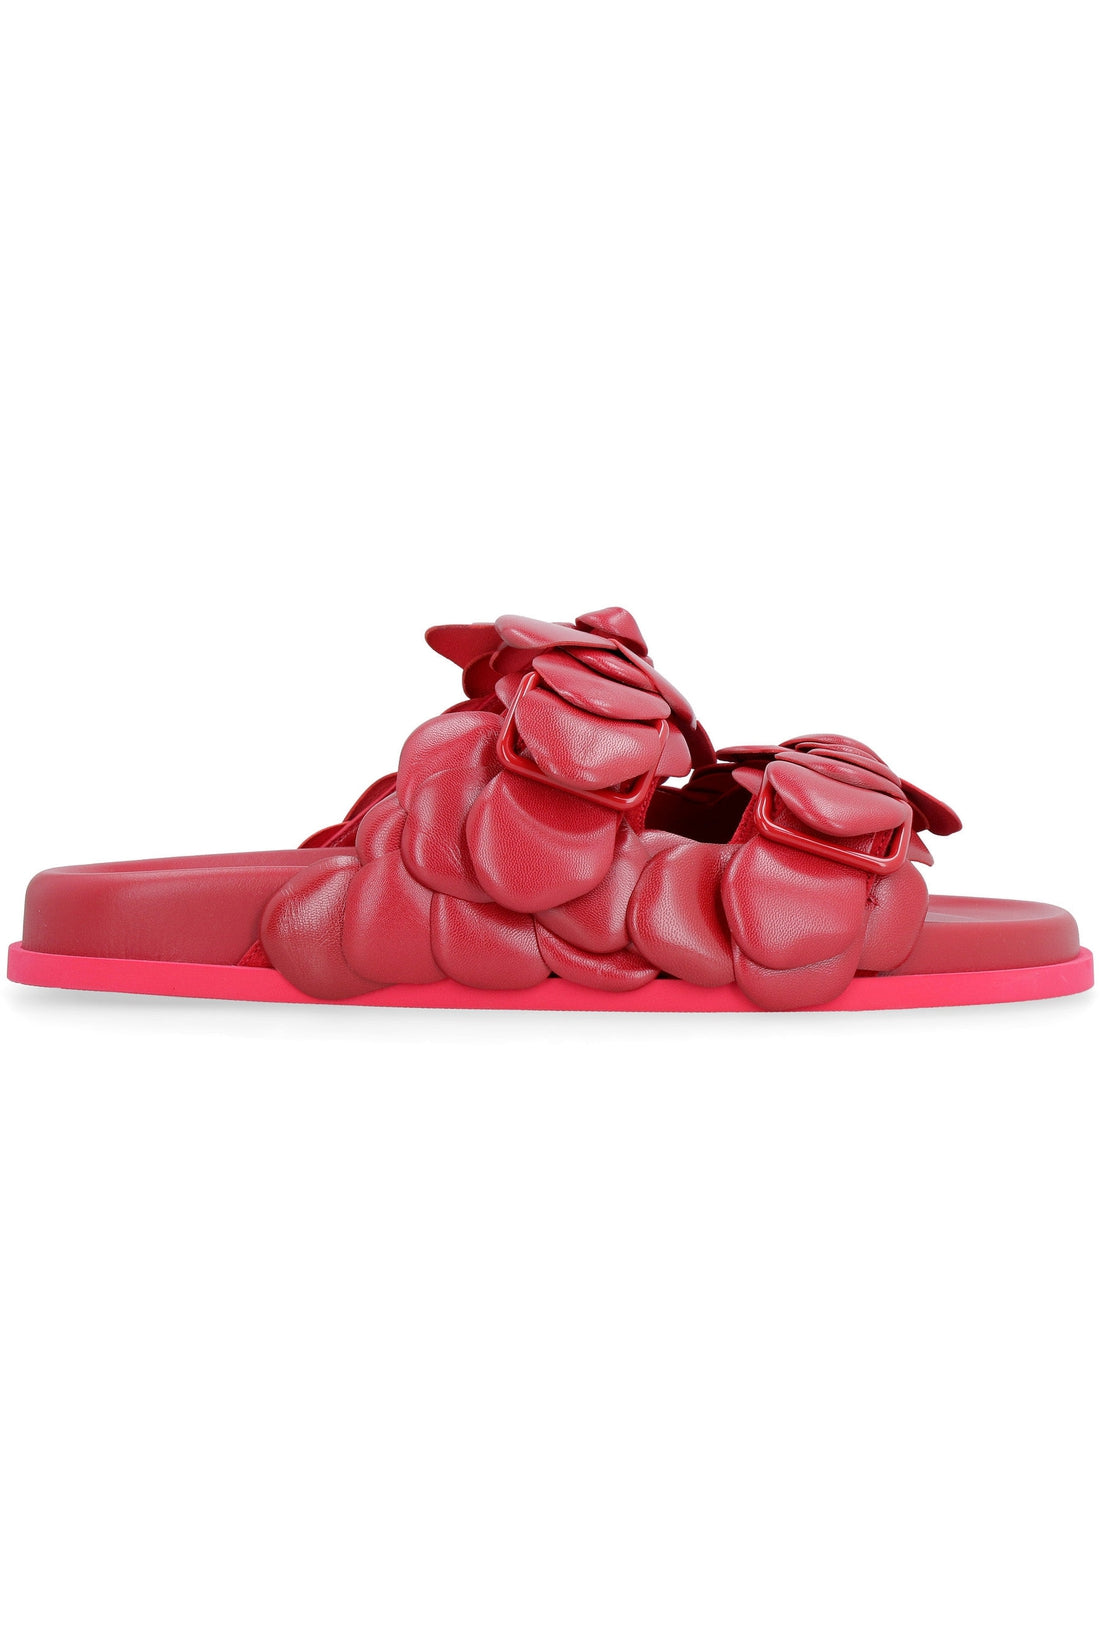 Valentino-OUTLET-SALE-Valentino Garavani - Atelier Shoes 03 Rose Edition leather slides-ARCHIVIST